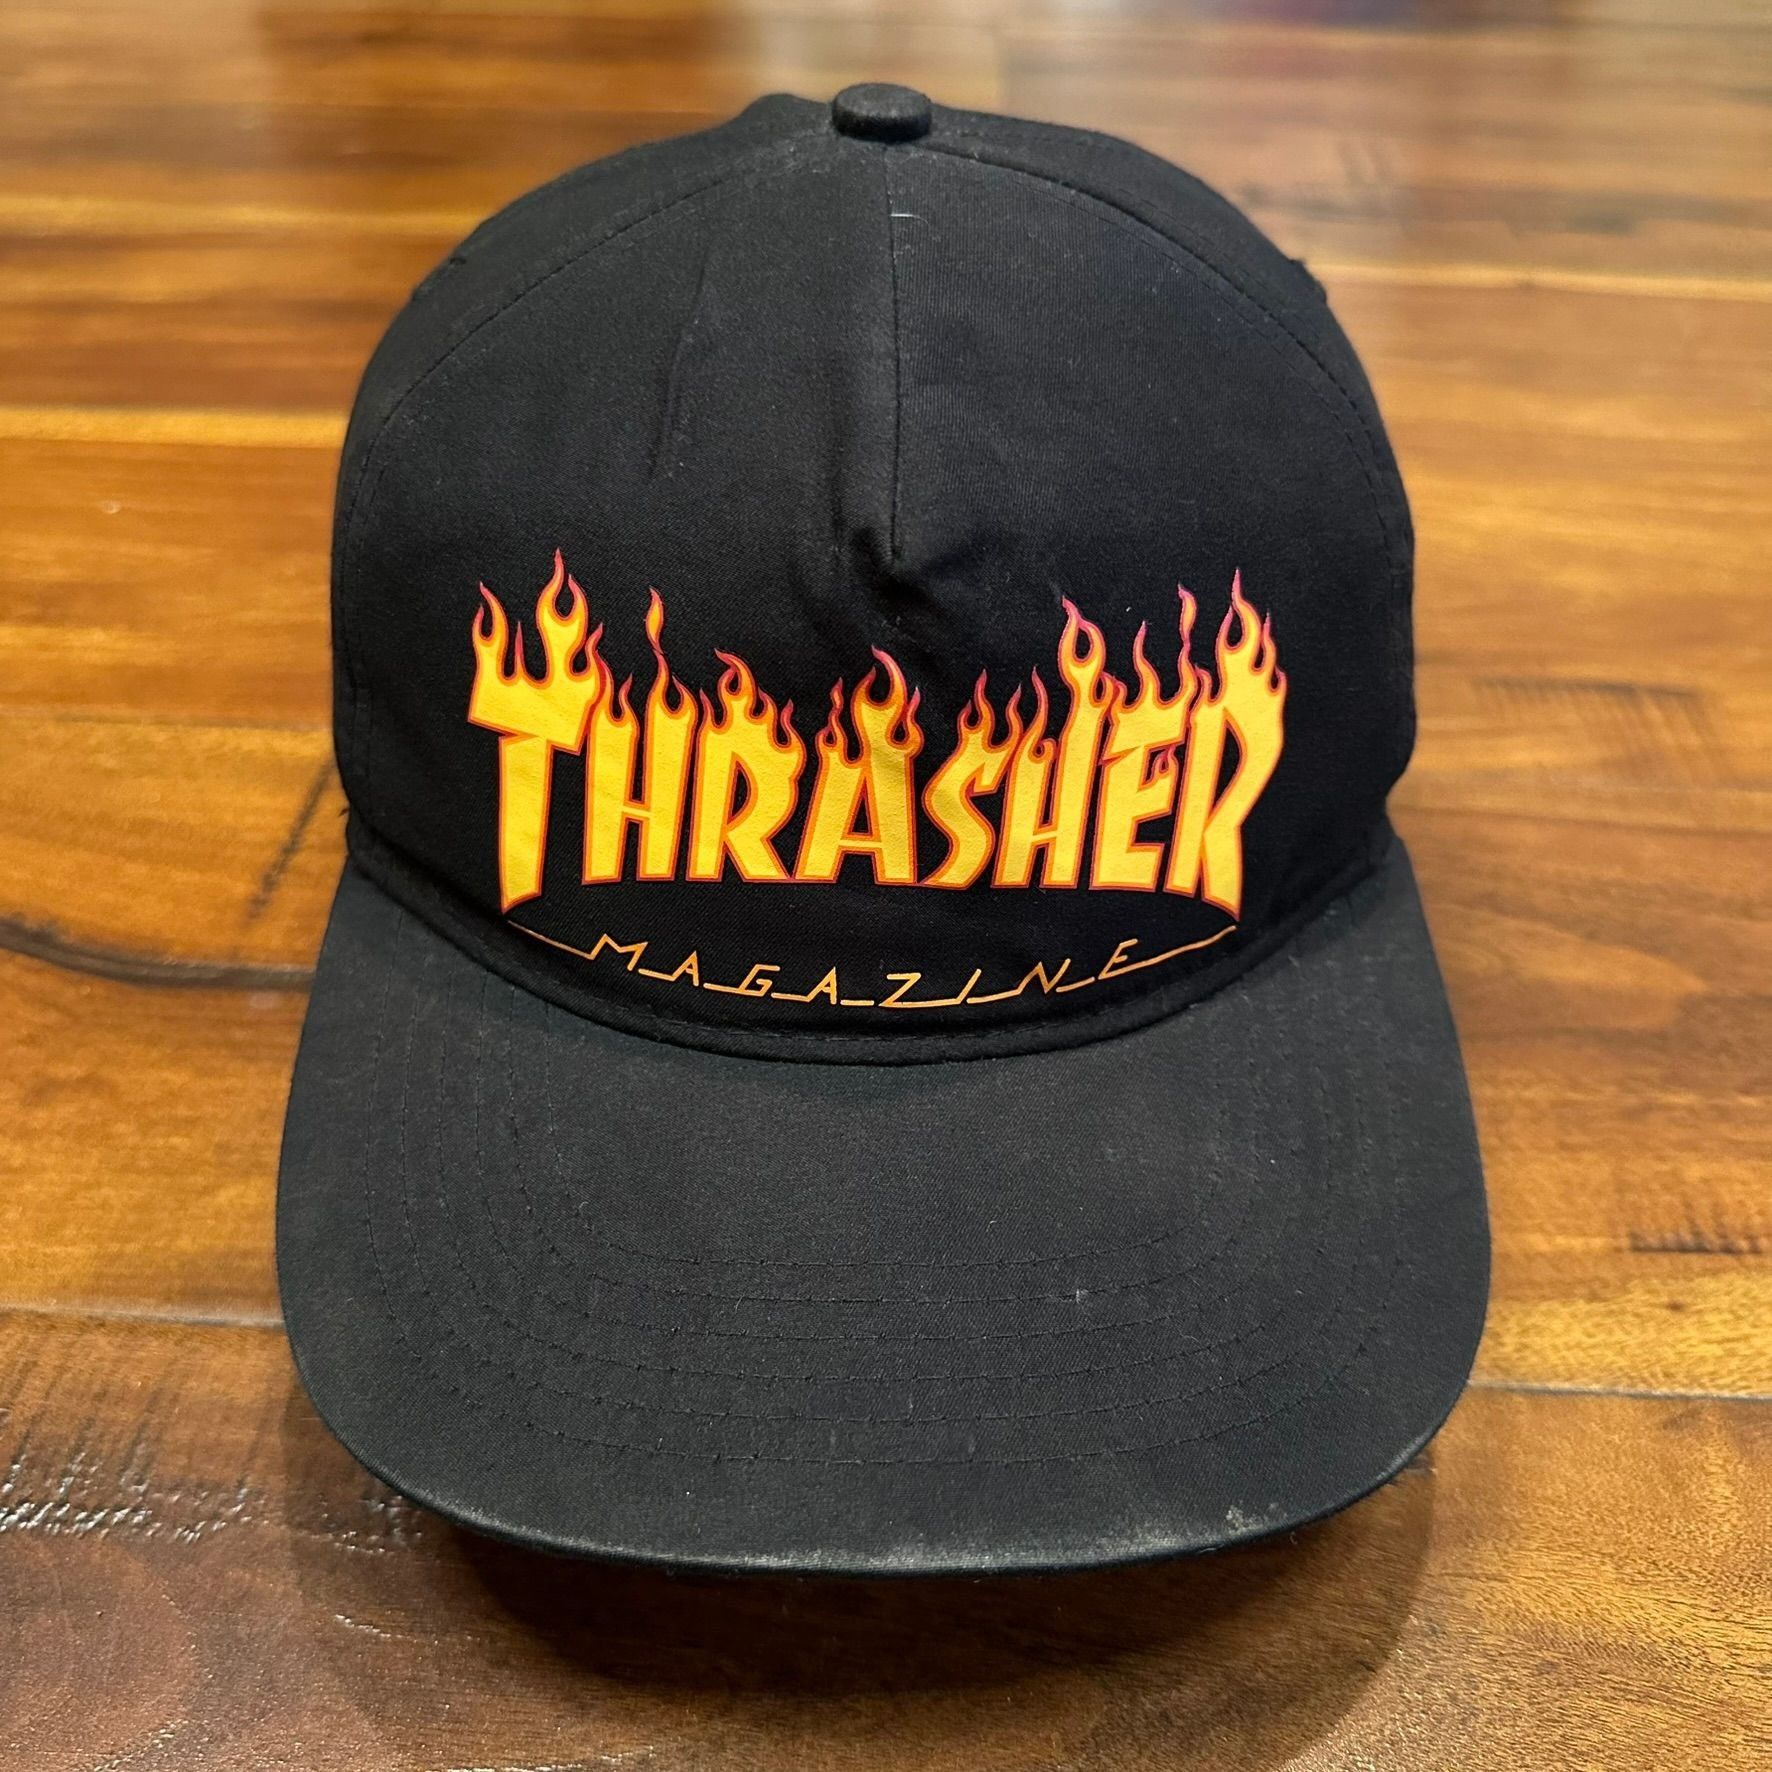 Thrasher Magazine Hat Cap Adult Black Snap Back Adjustable